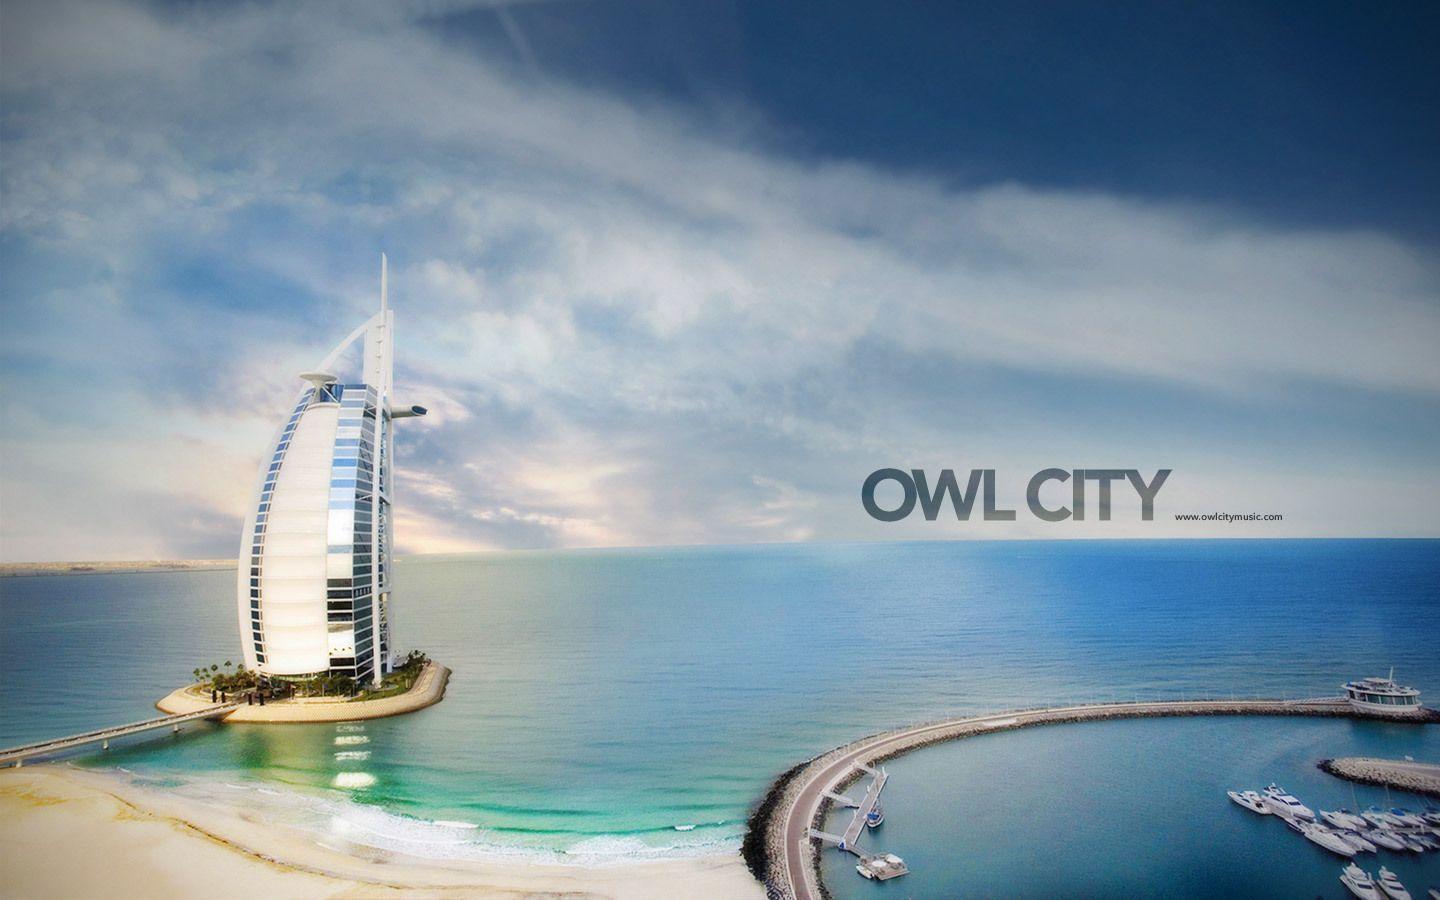 Owl City Background 2035 Download Free HD Desktop Background